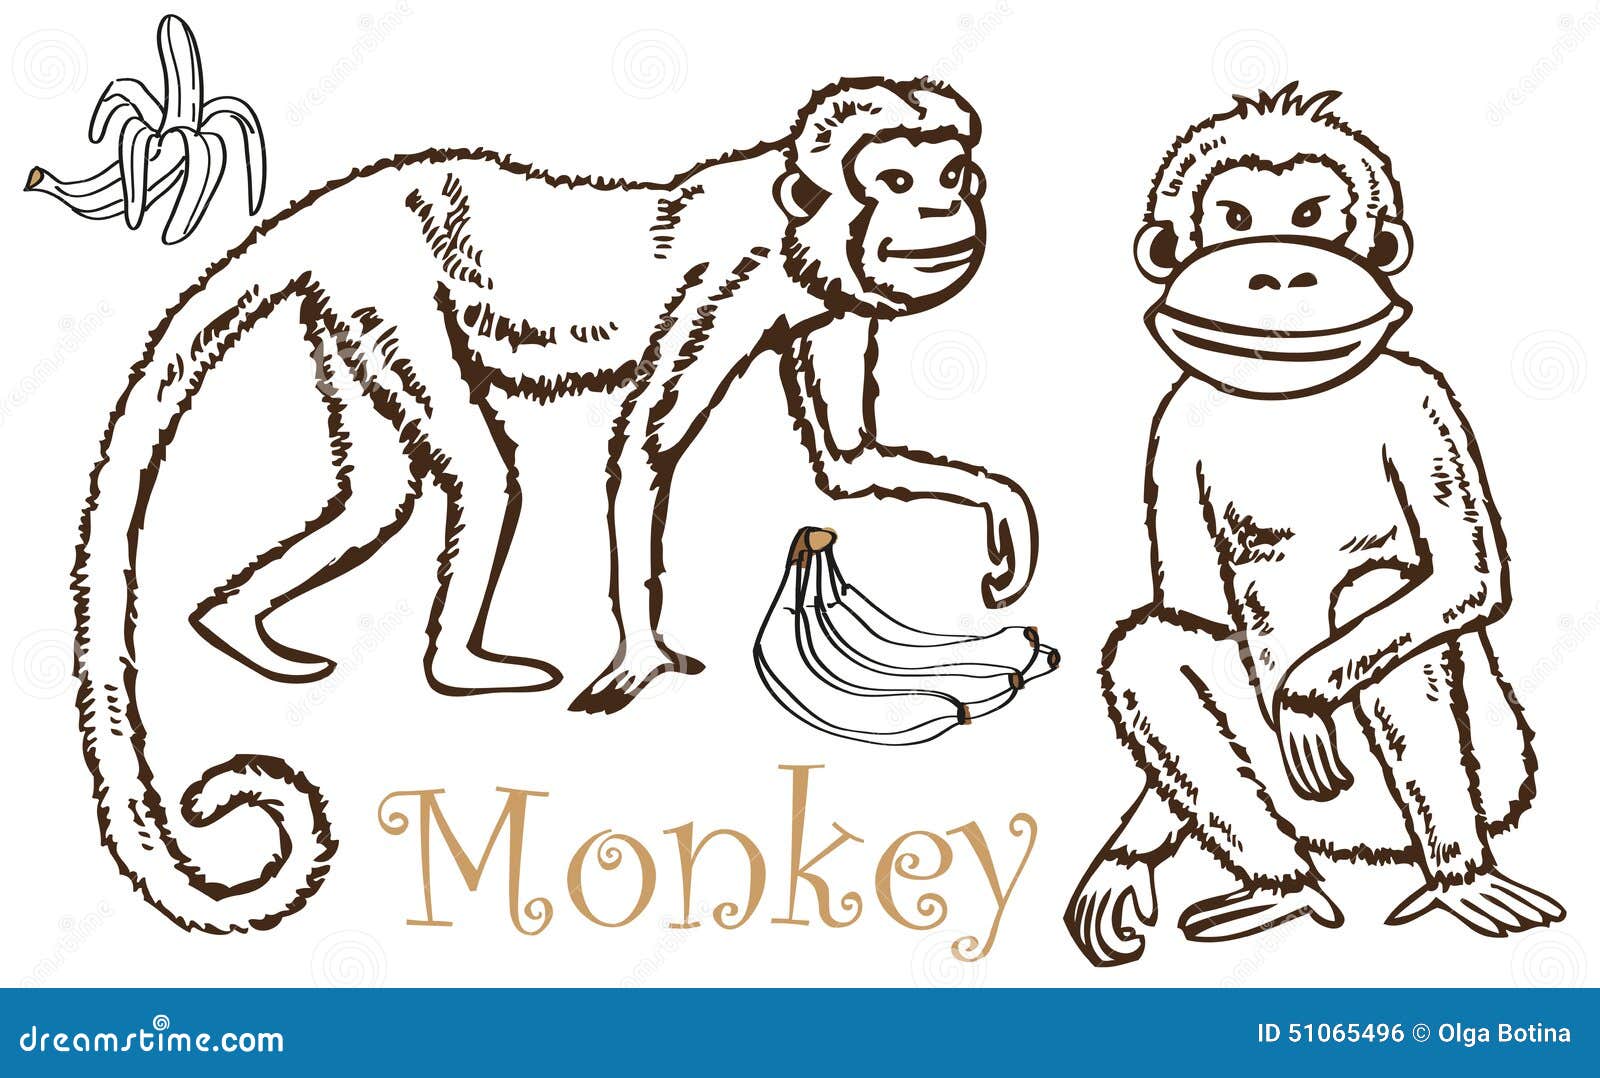 Рисунок обезьянки яшки 3 класс. Обезьяна вектор. Обезьяна и очки рисунок. Мартышка и очки раскраска. Рисунок к басне мартышка и очки.